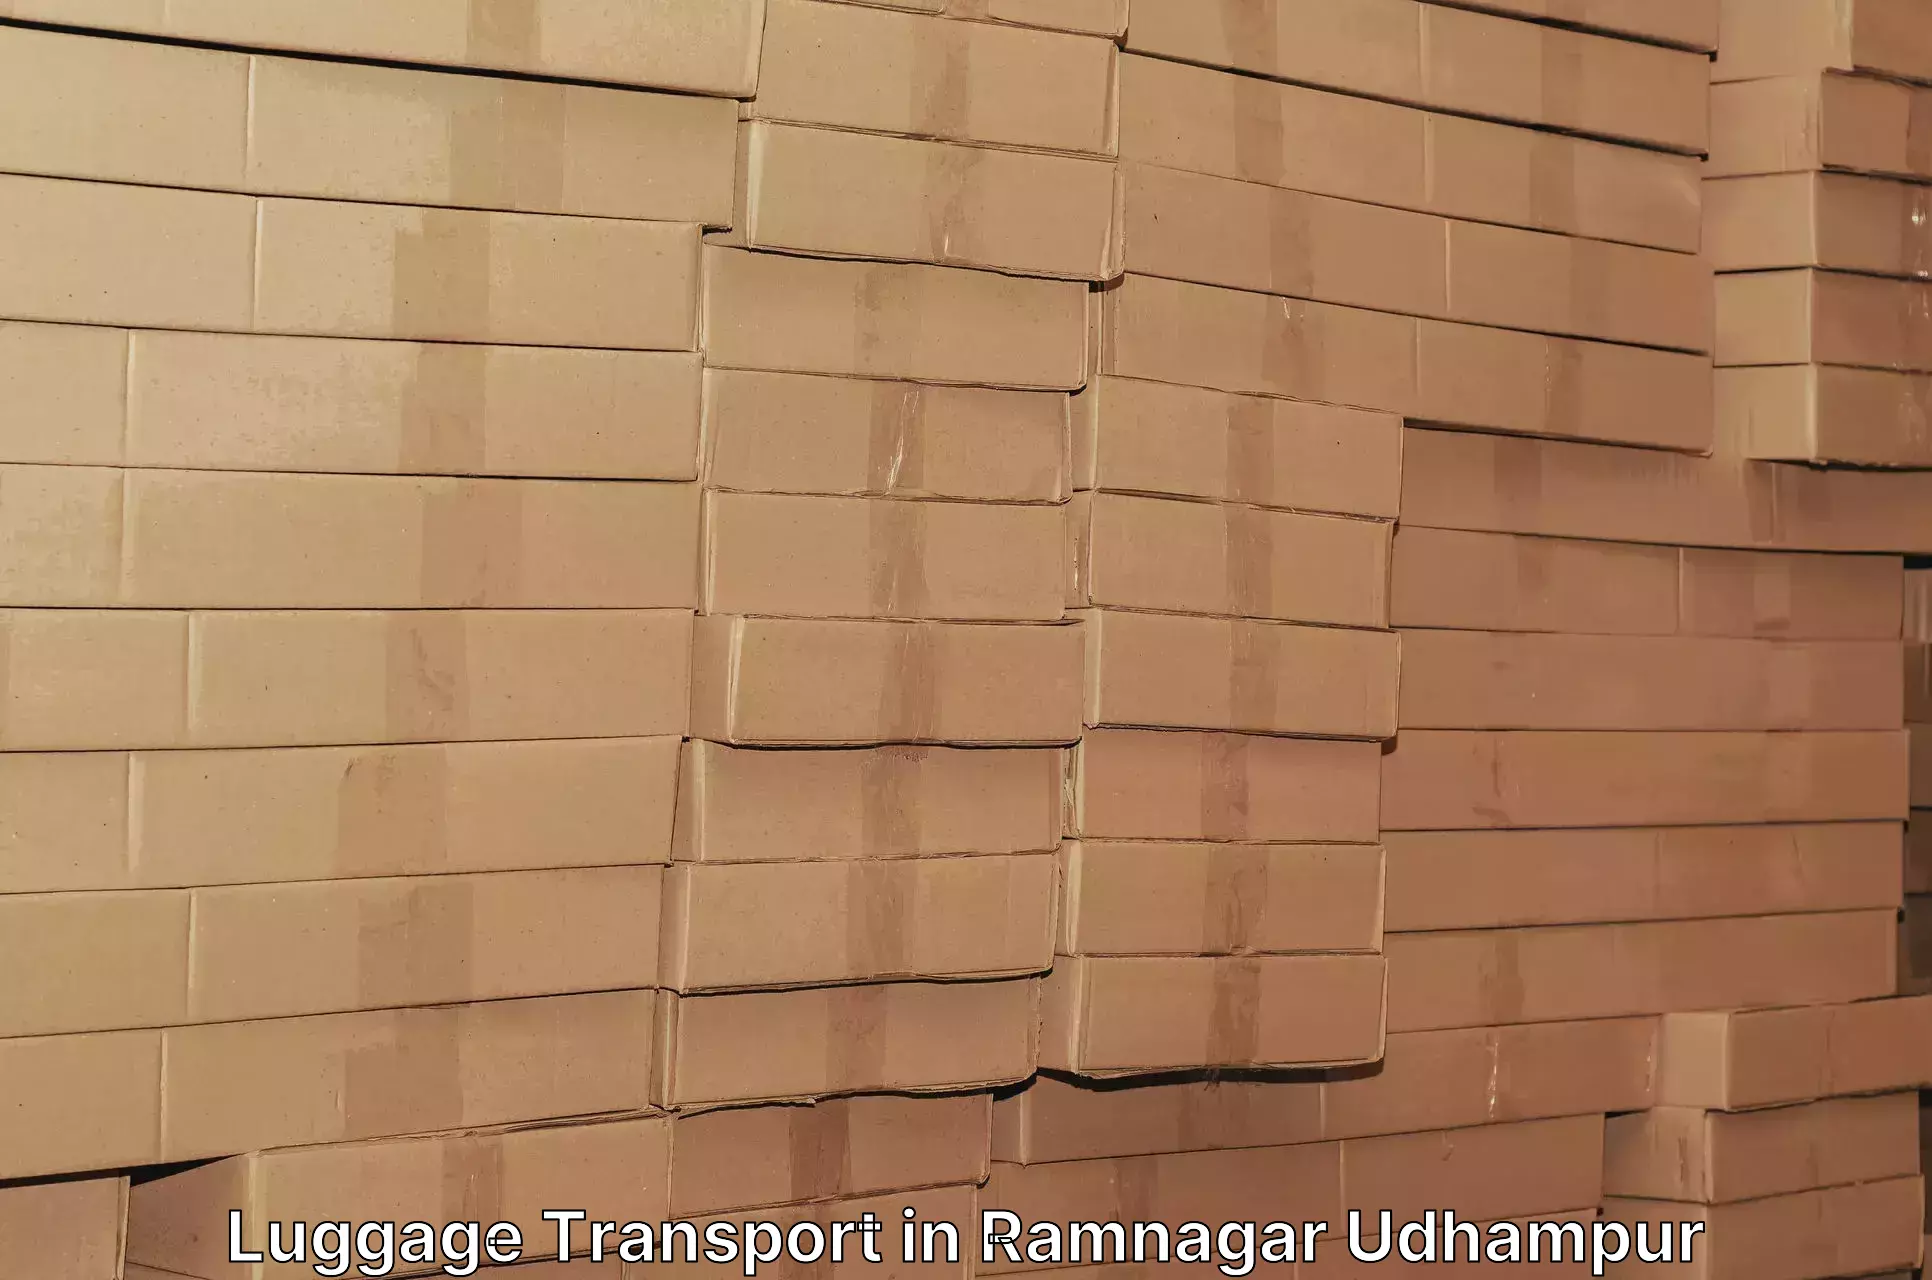 Baggage relocation service in Ramnagar Udhampur